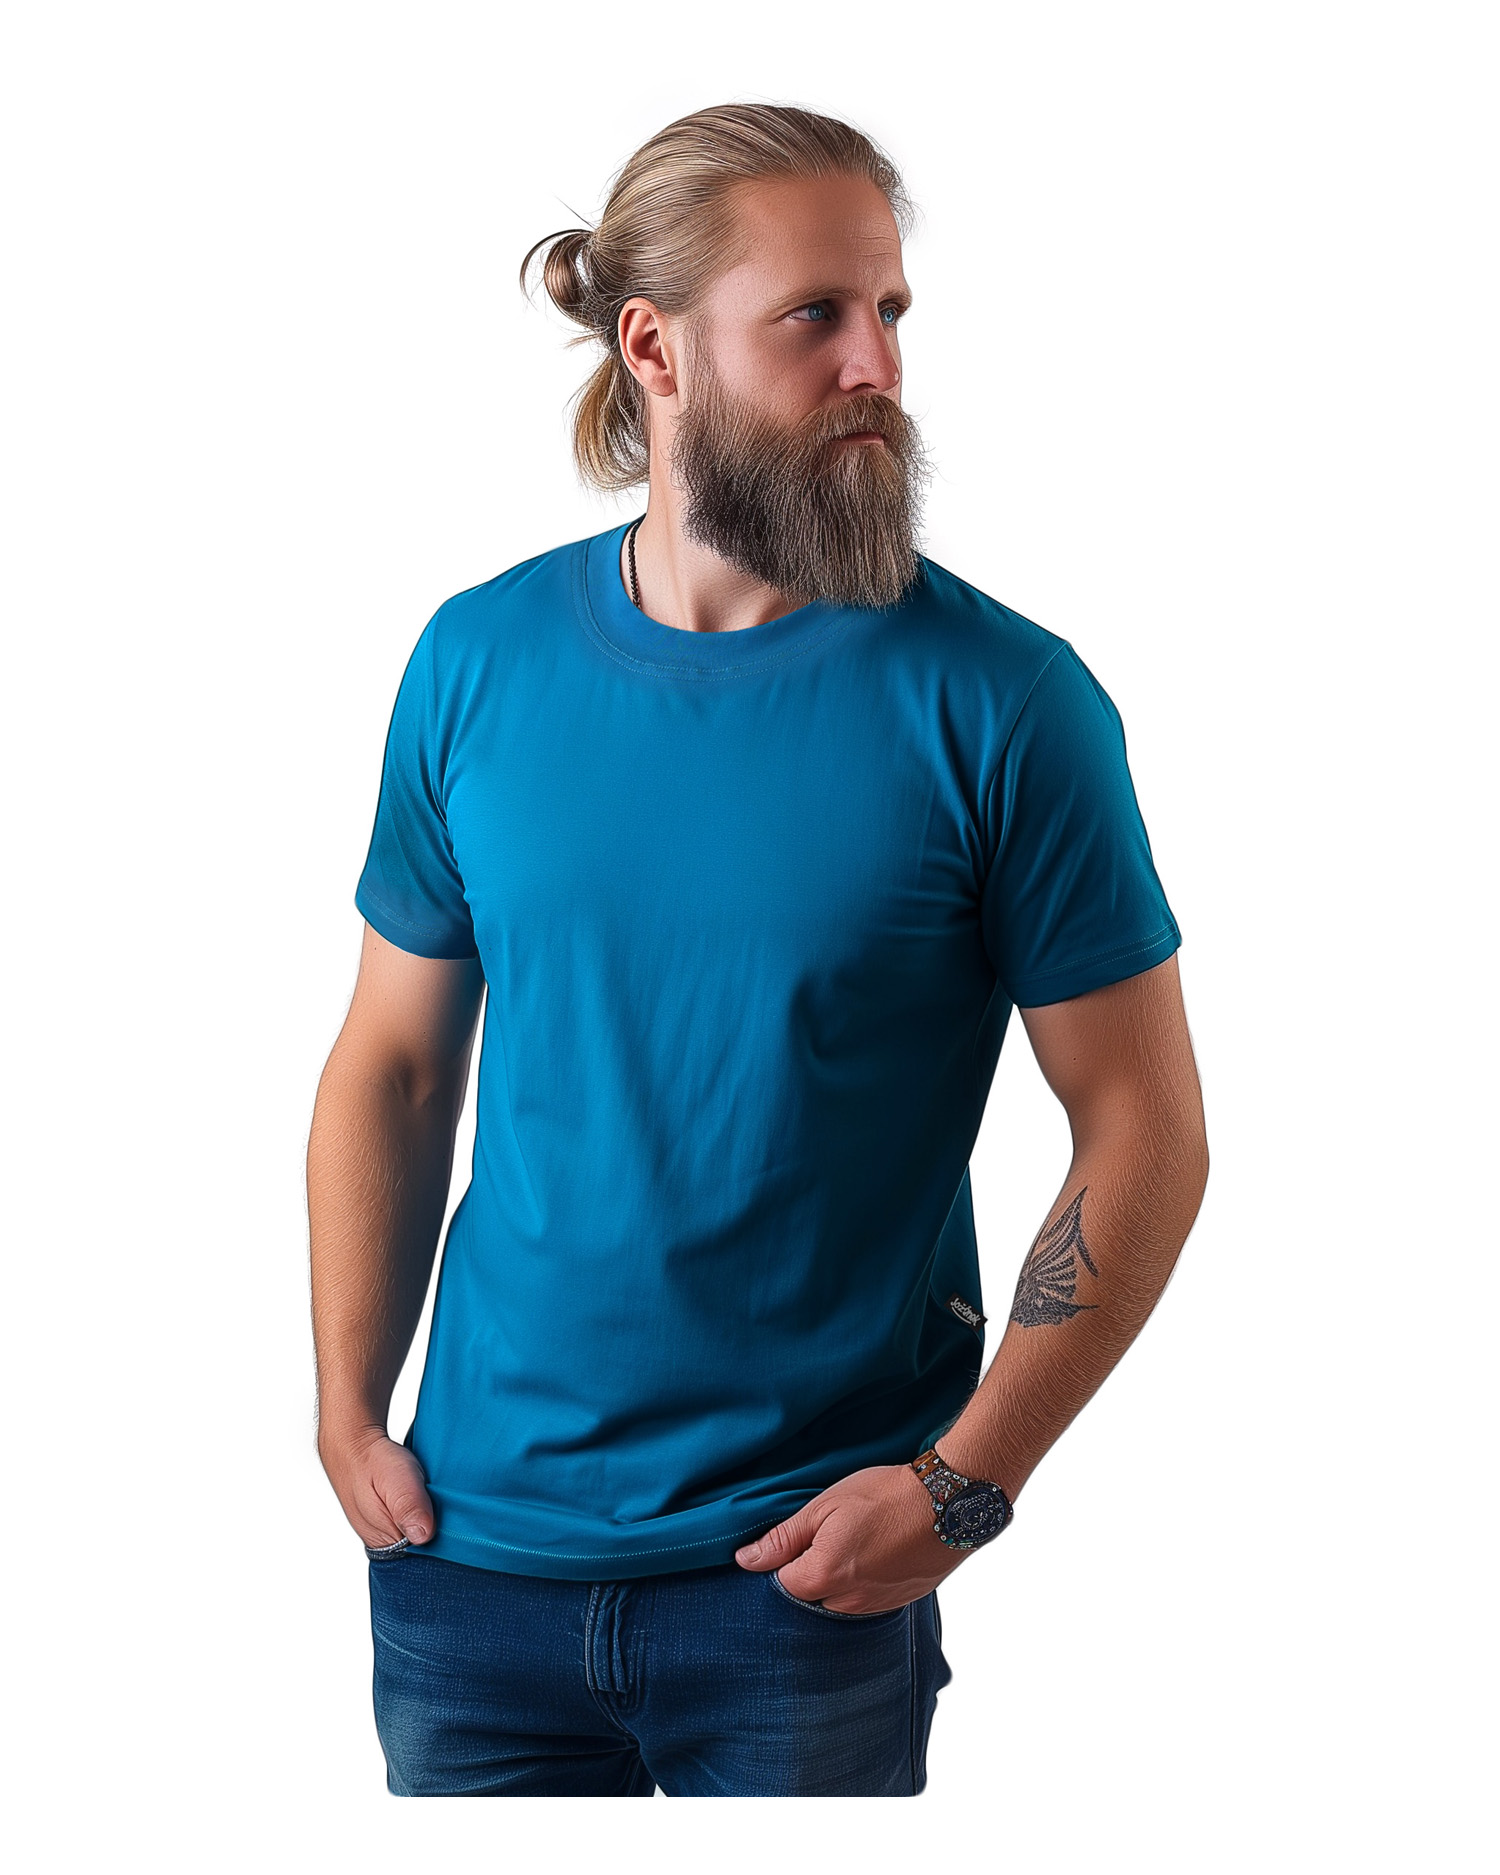 Men’s T-shirt Marek, short sleeve, dark turquoise